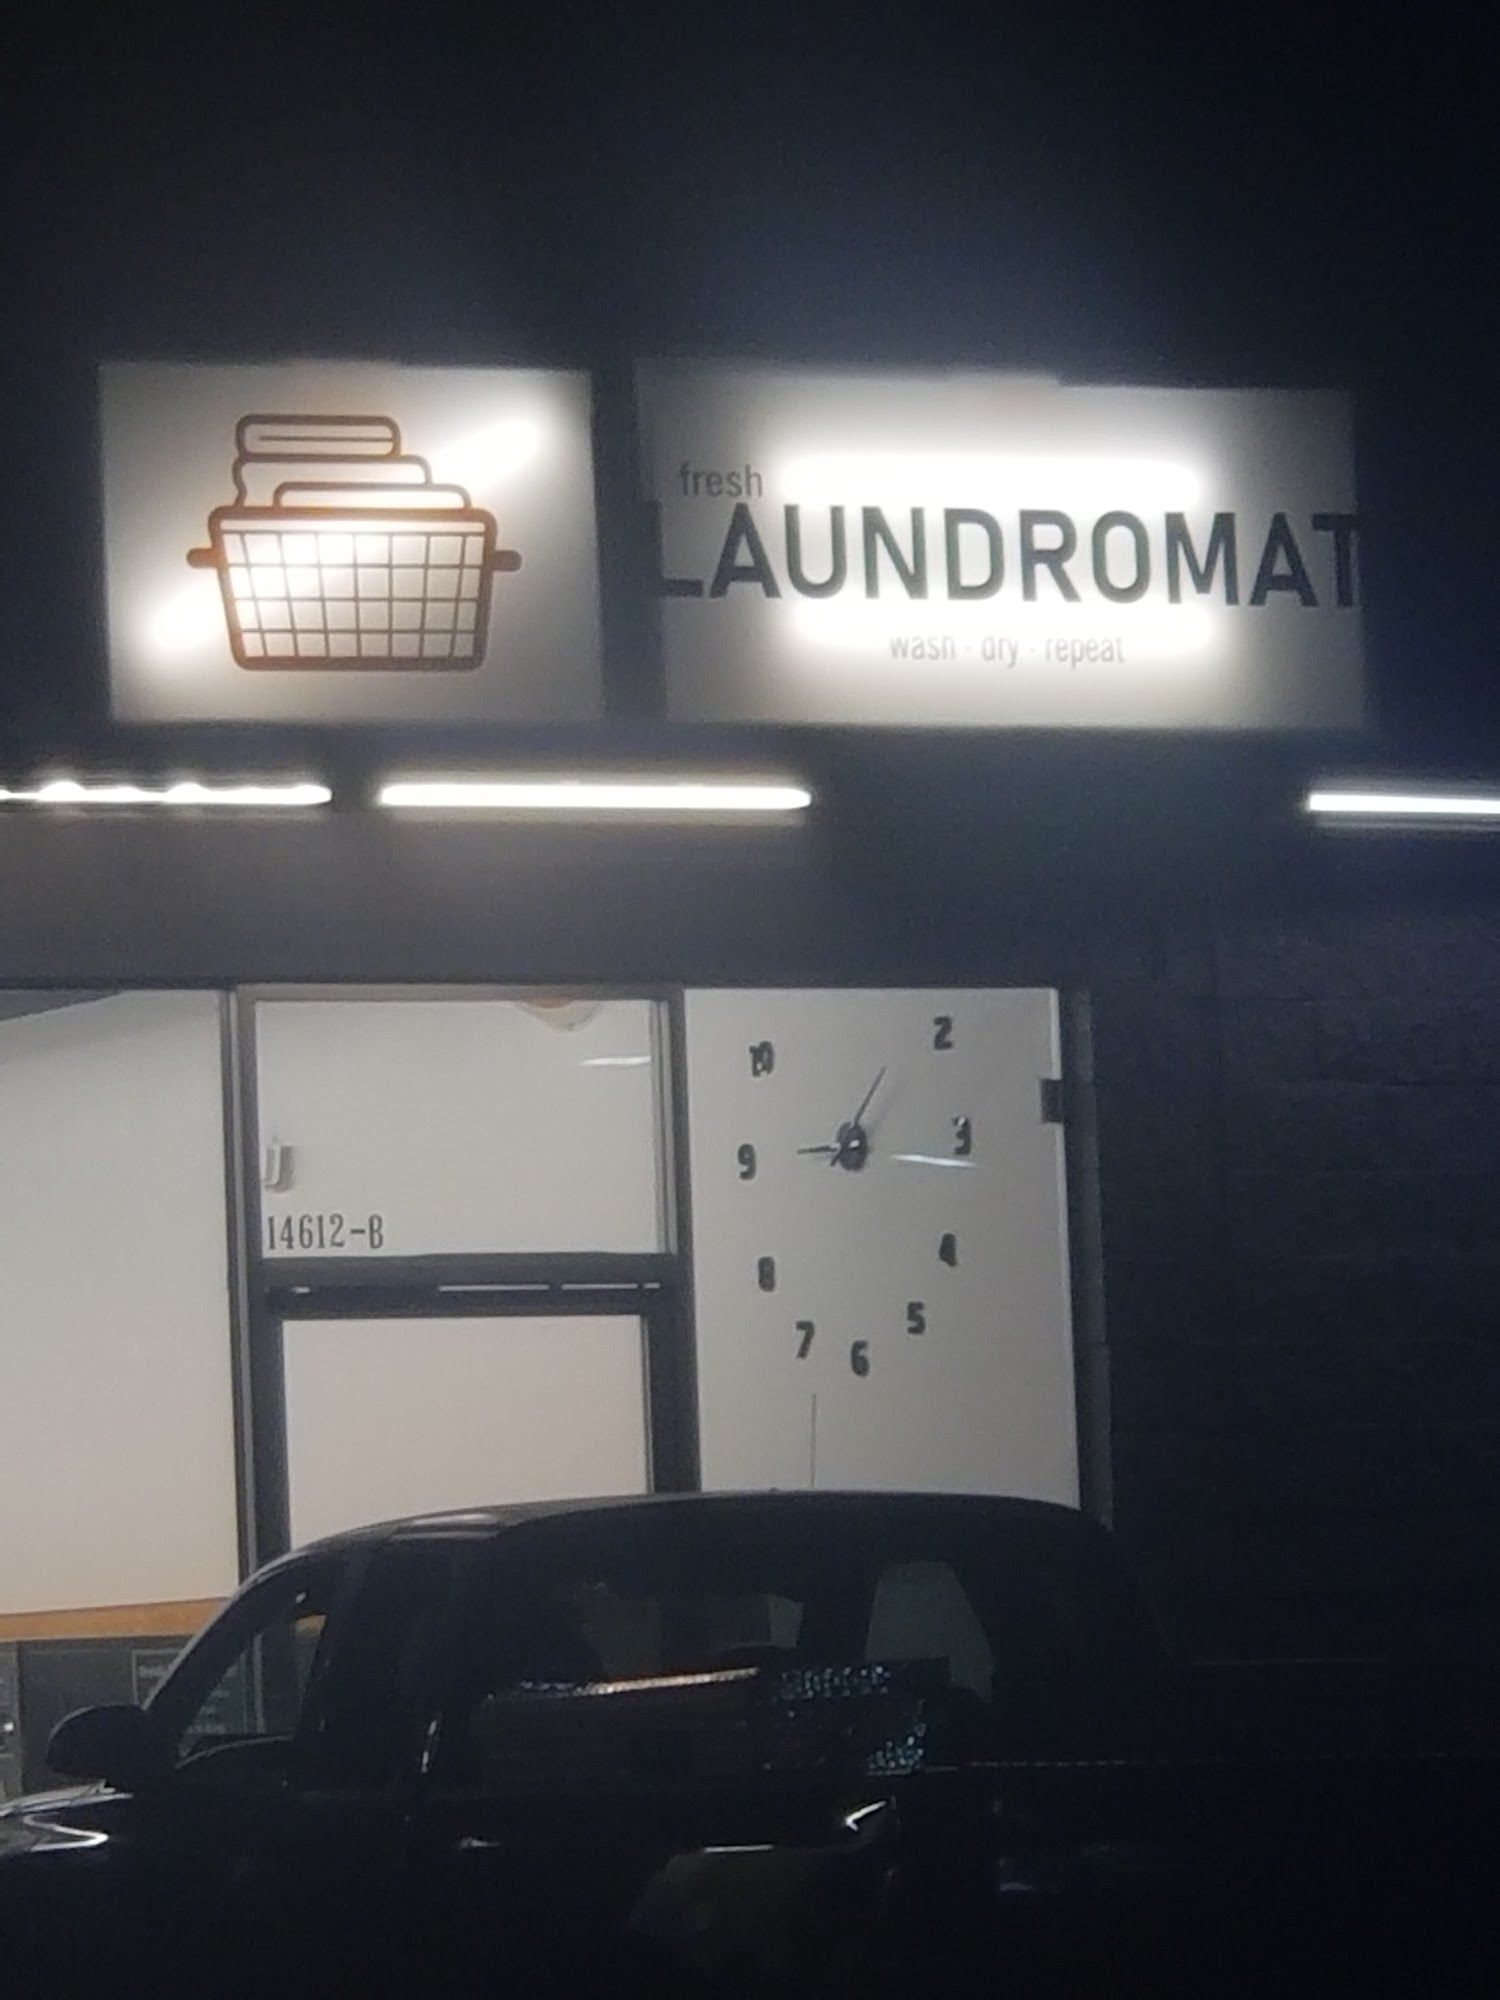 Fresh Laundromat